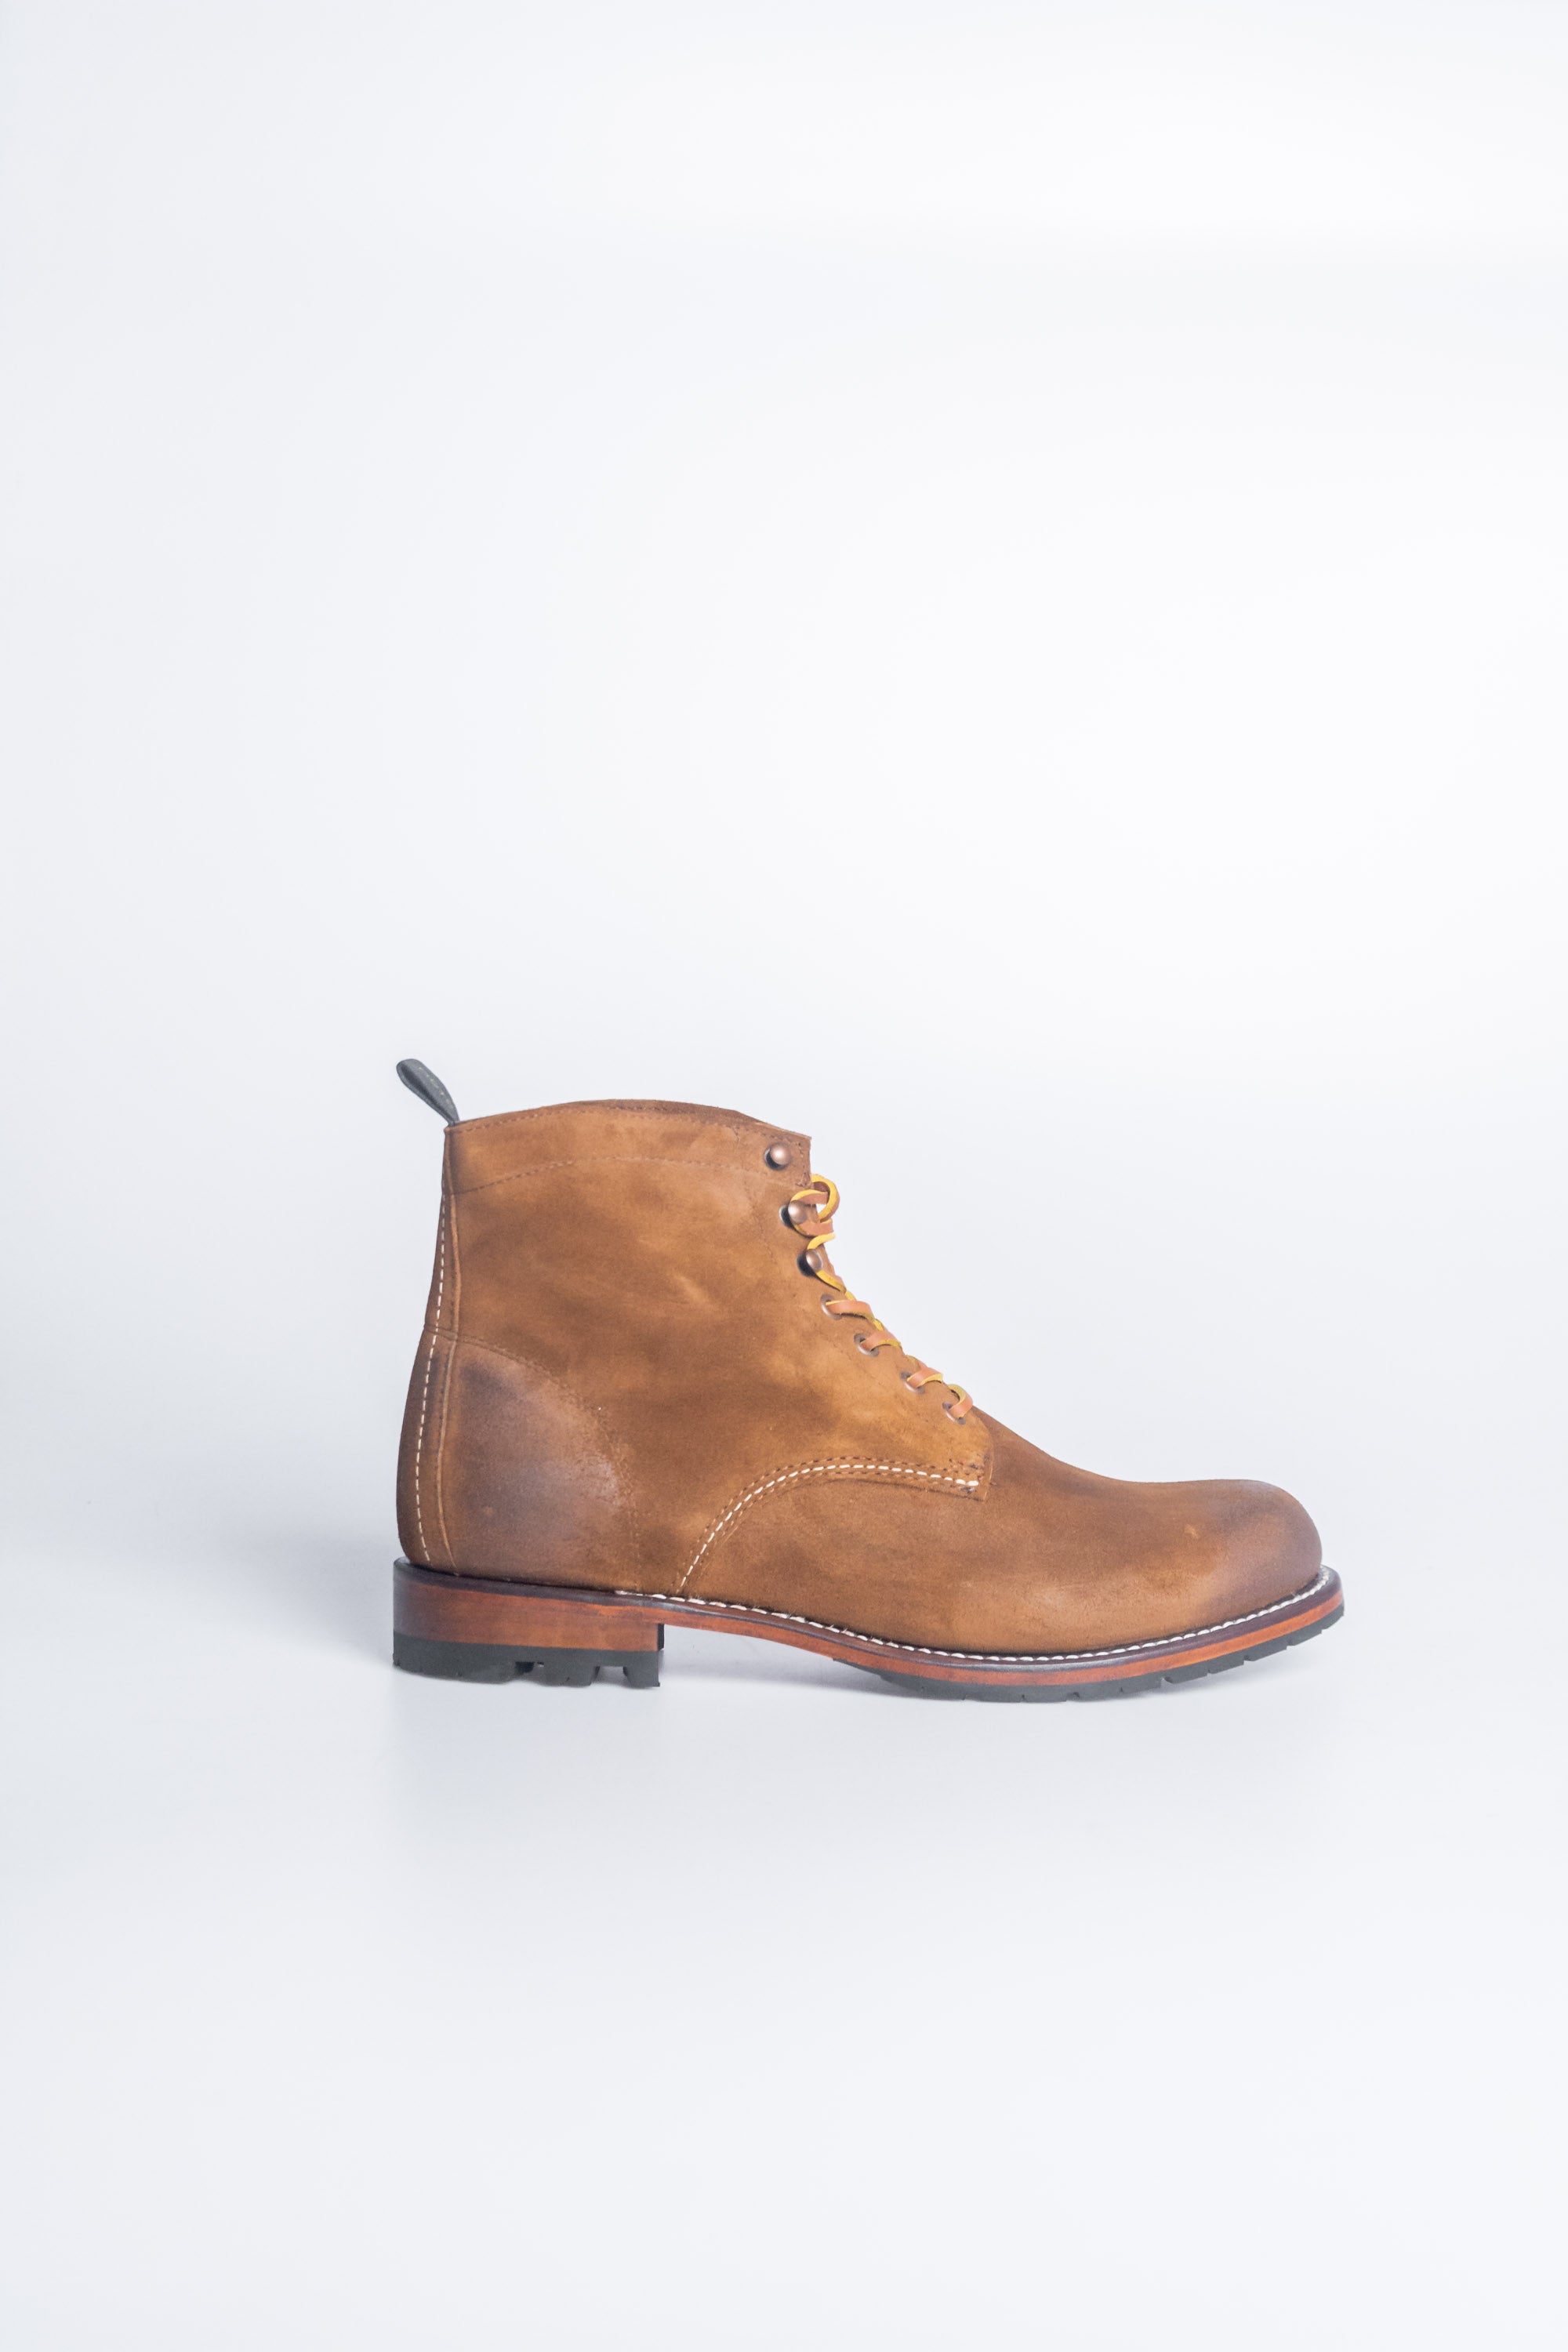 Rua - Mens Tan Leather Boots MERLA MOTO